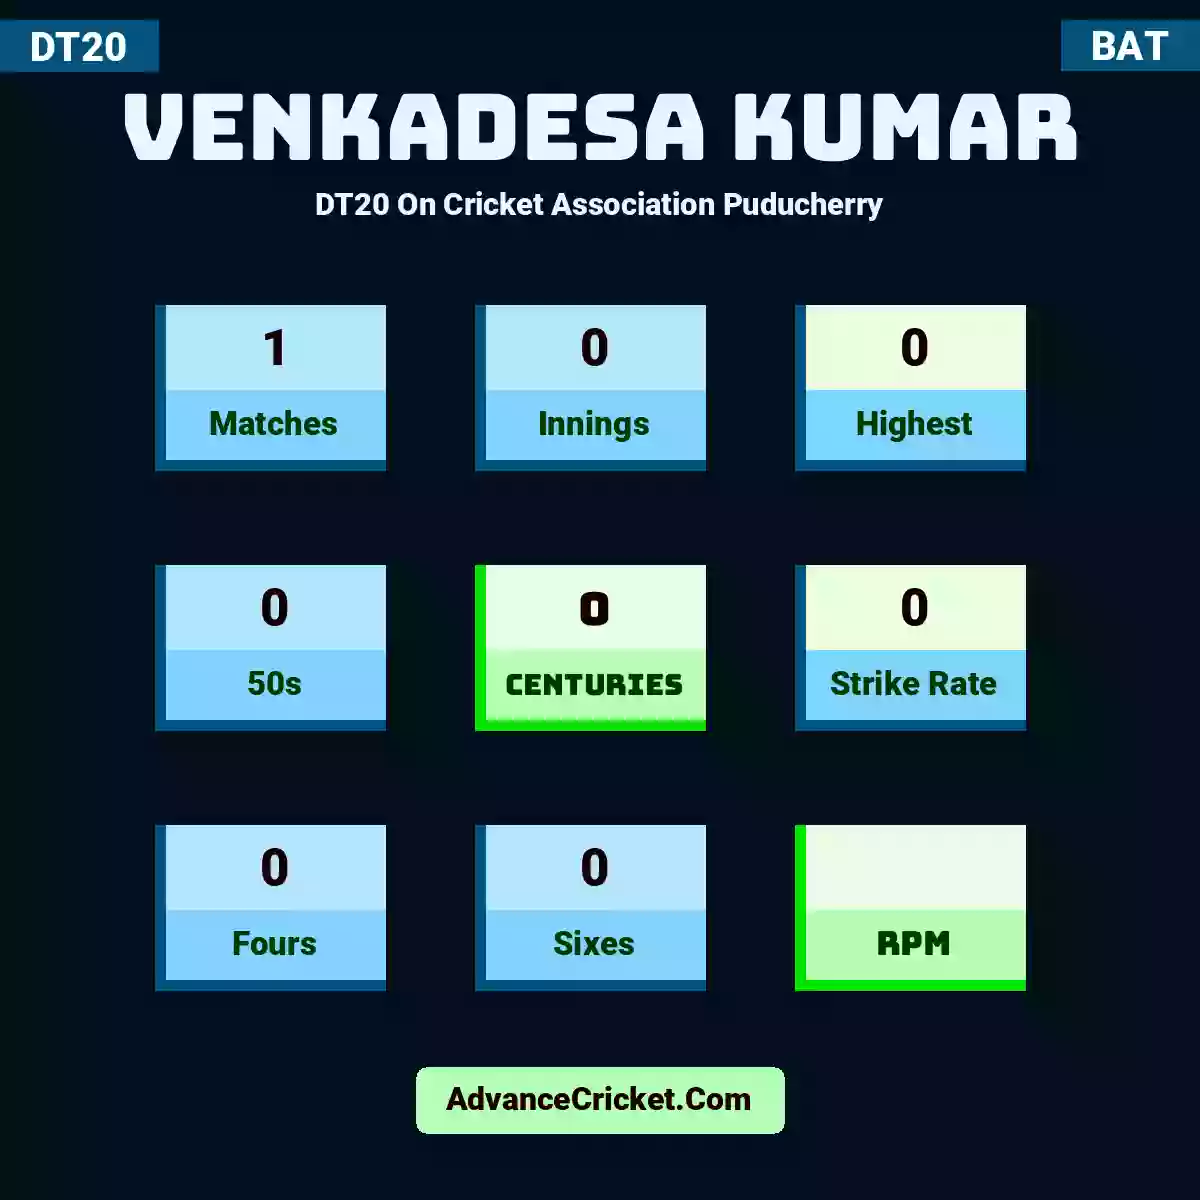 Venkadesa Kumar DT20  On Cricket Association Puducherry, Venkadesa Kumar played 1 matches, scored 0 runs as highest, 0 half-centuries, and 0 centuries, with a strike rate of 0. V.Kumar hit 0 fours and 0 sixes.